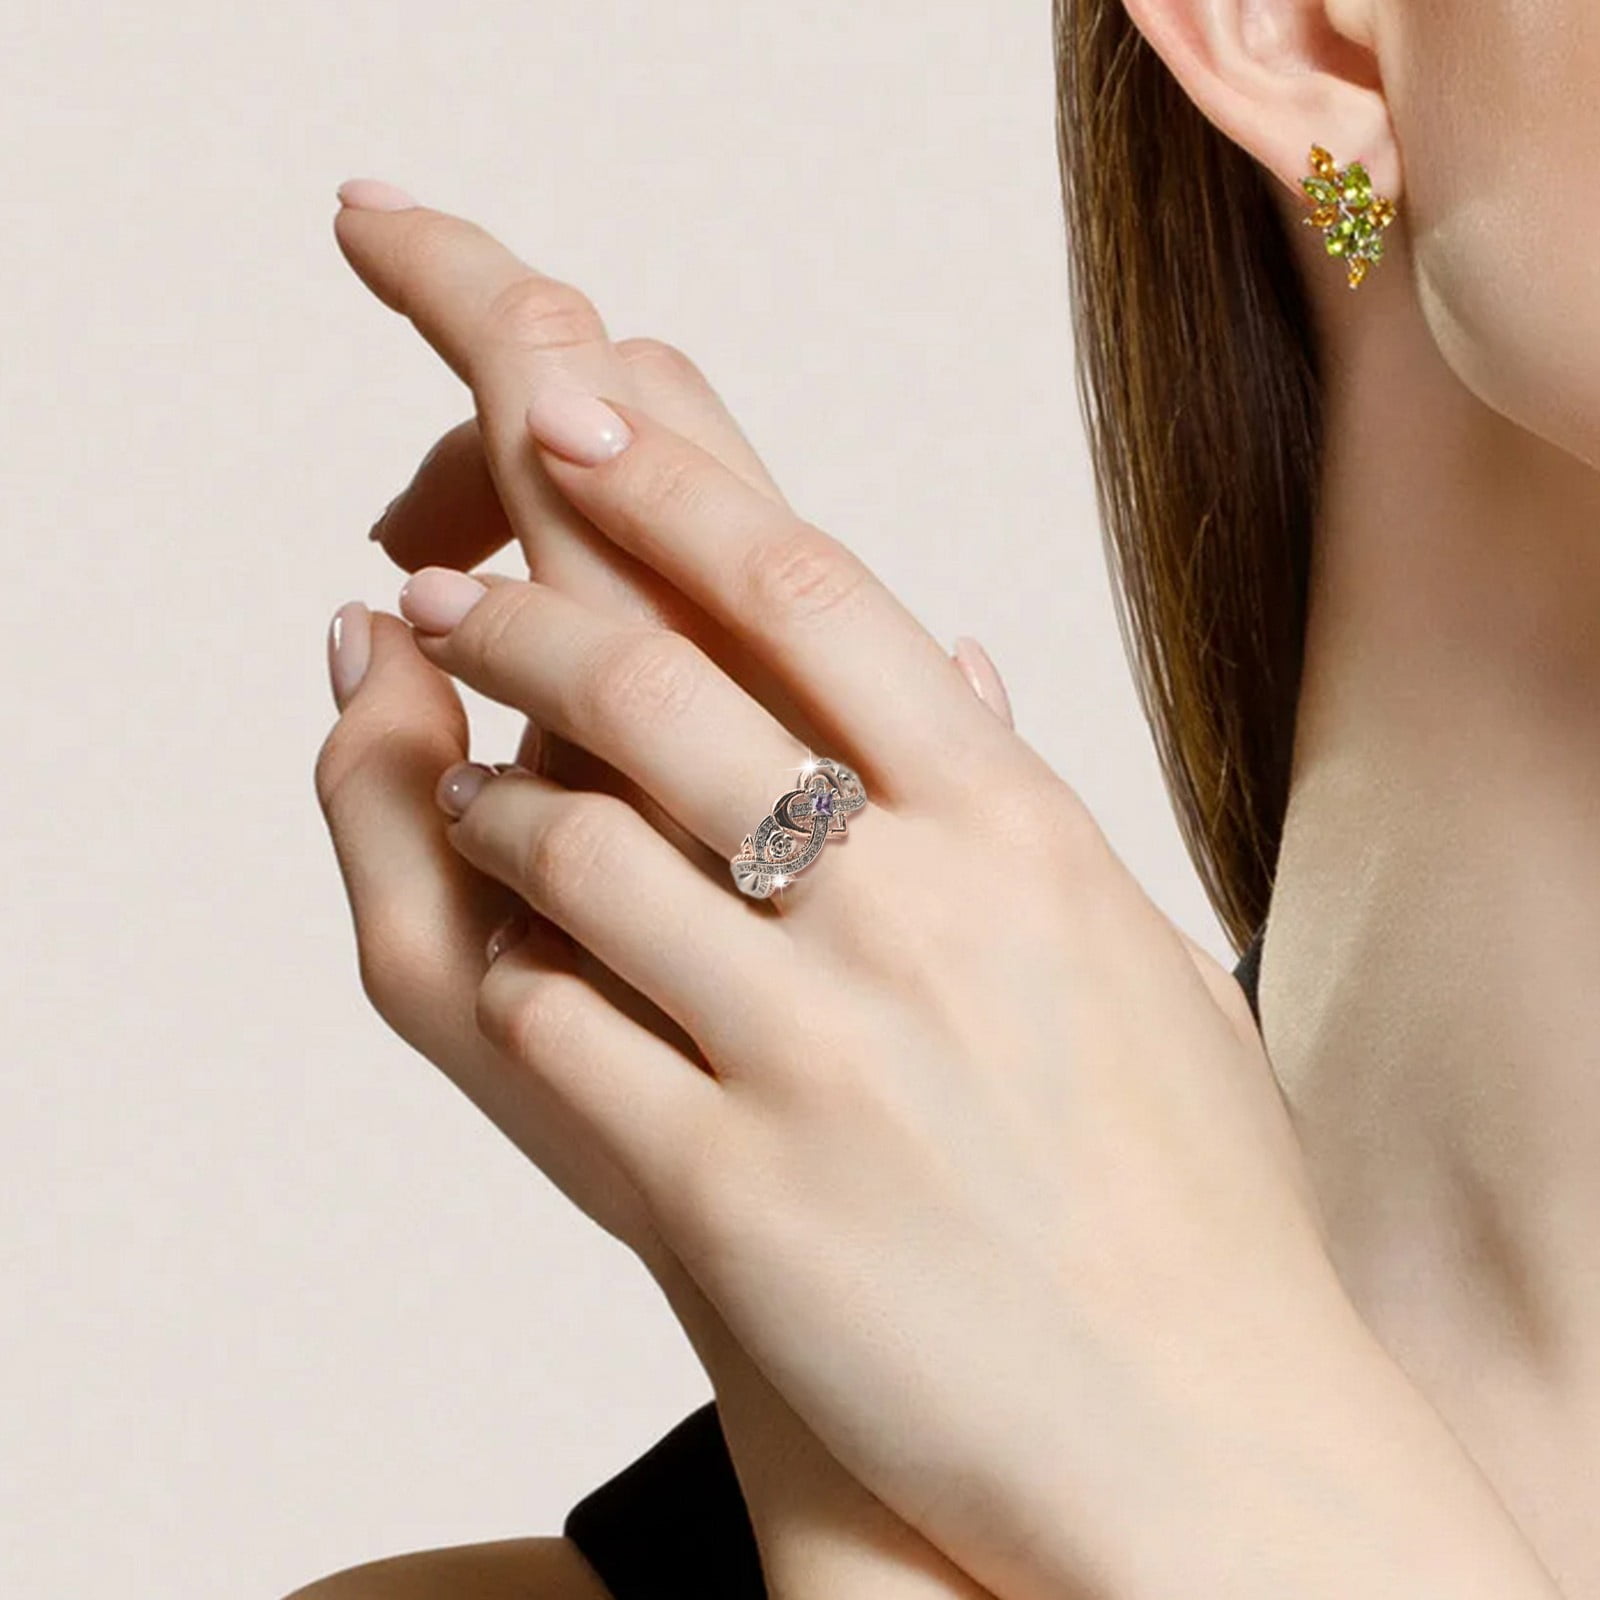 1 Gram Gold Plated Cool Design With Diamond New Style Ring For Women -  Style Lrg-007 at Rs 1370.00 | सोने का पानी चढ़ी हुई अंगूठी - Soni Fashion,  Rajkot | ID: 2850819256655